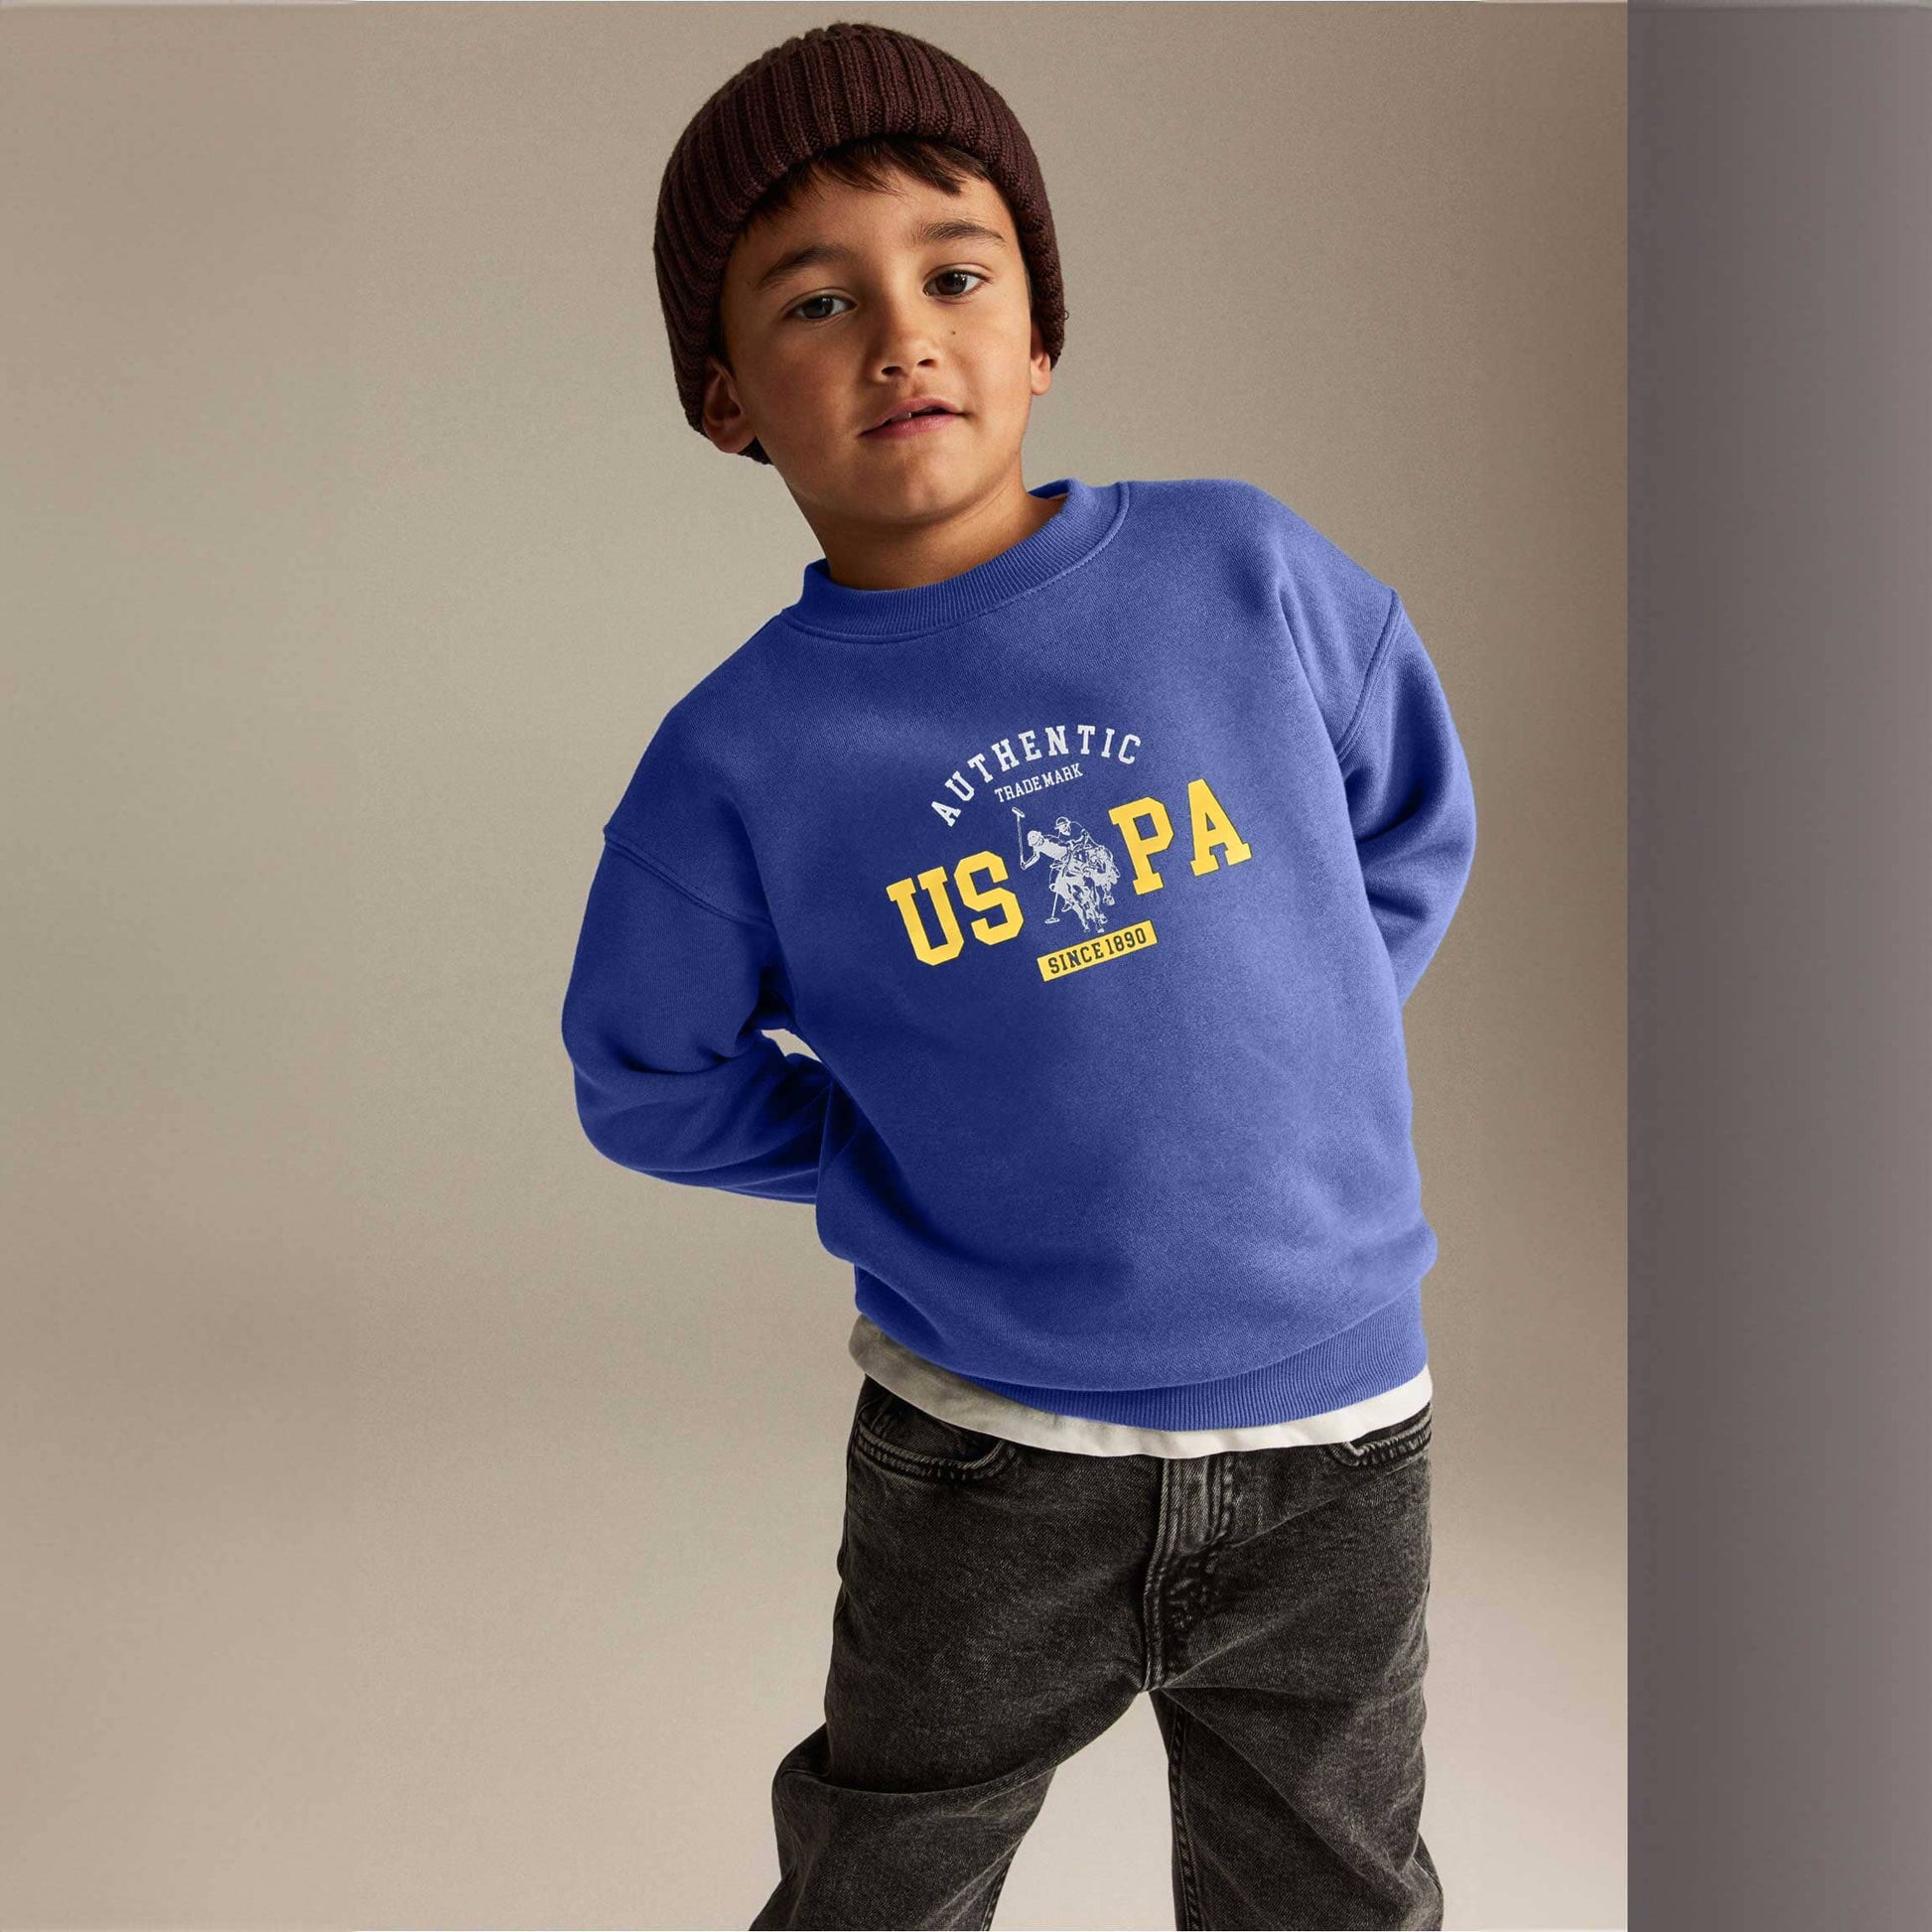 USPA Kid's Authentic US Printed Fleece Sweat Shirt Kid's Sweat Shirt Fiza Blue (XS) 2-3 Years 